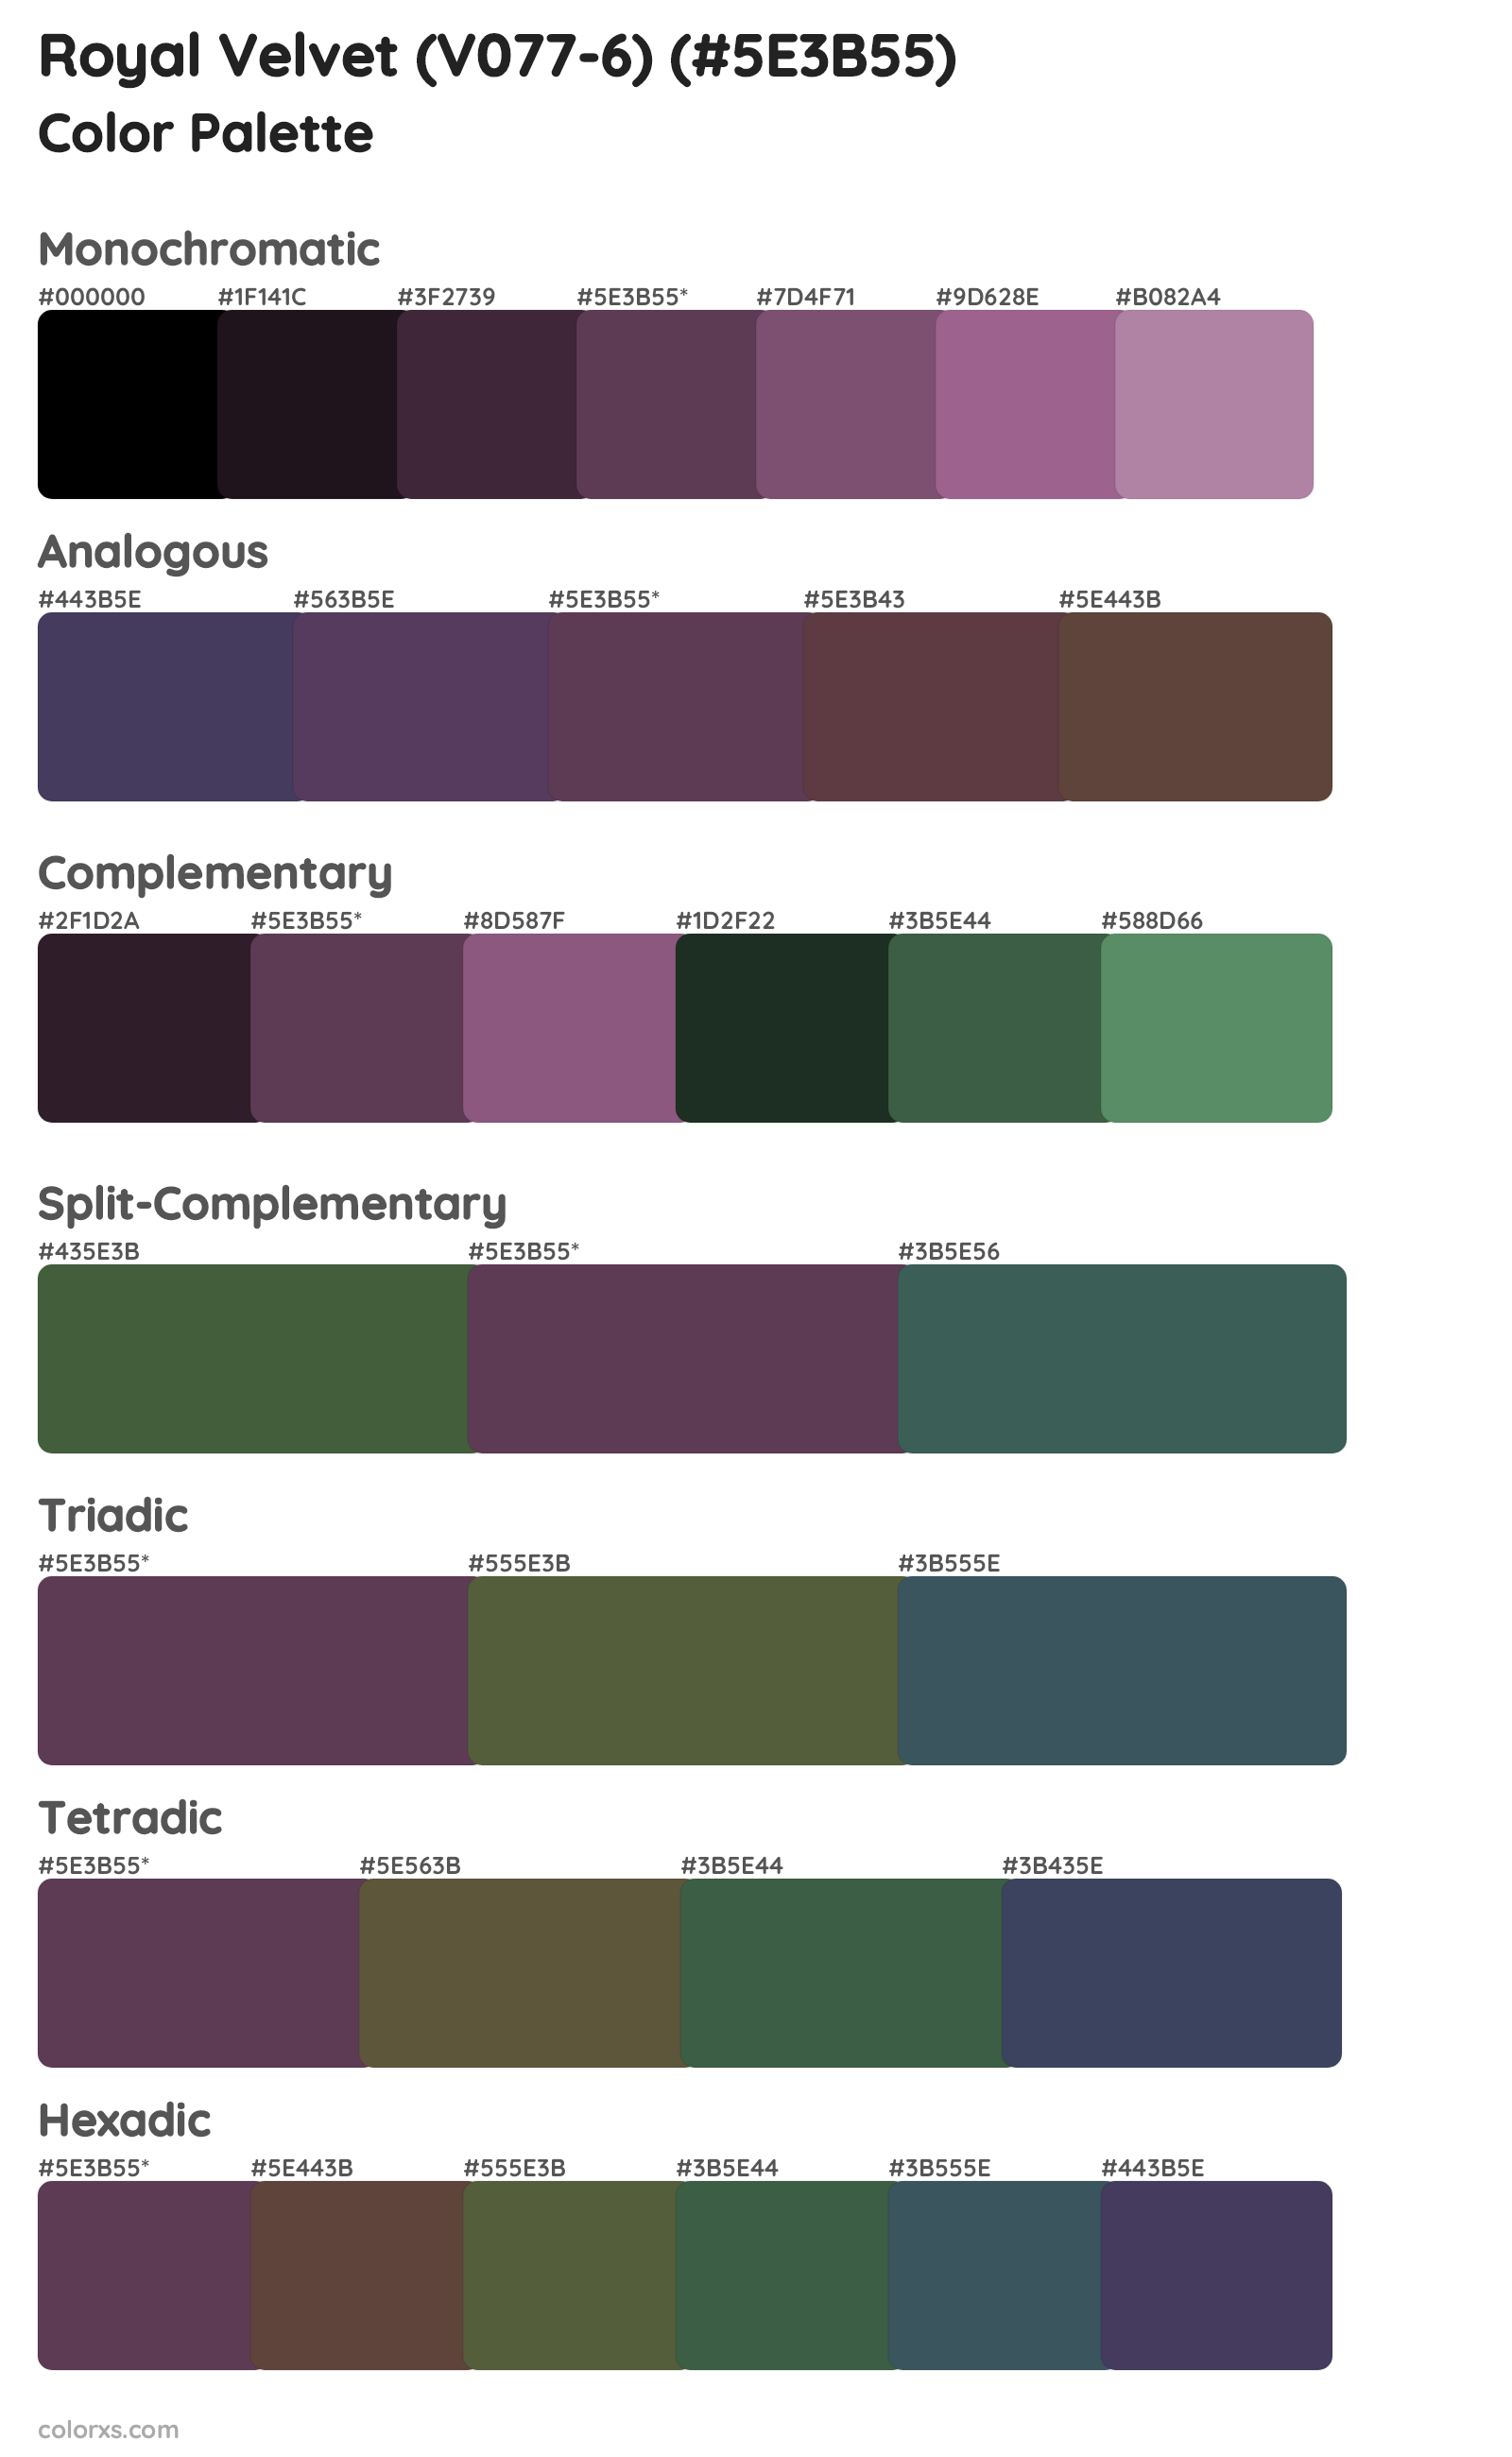 Royal Velvet (V077-6) Color Scheme Palettes